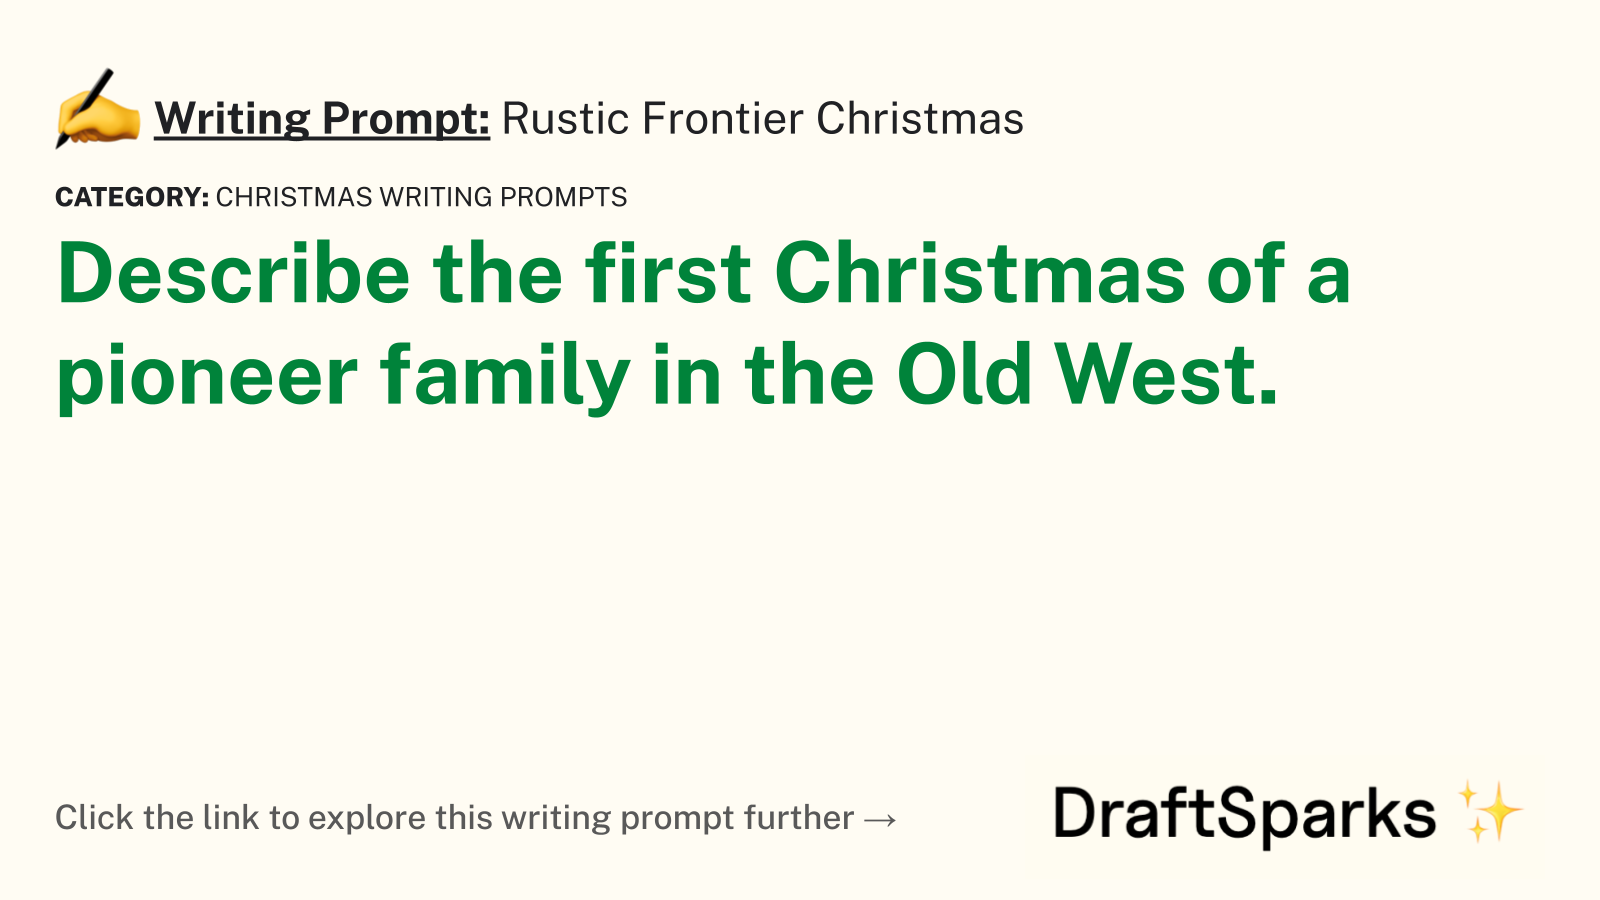 Rustic Frontier Christmas